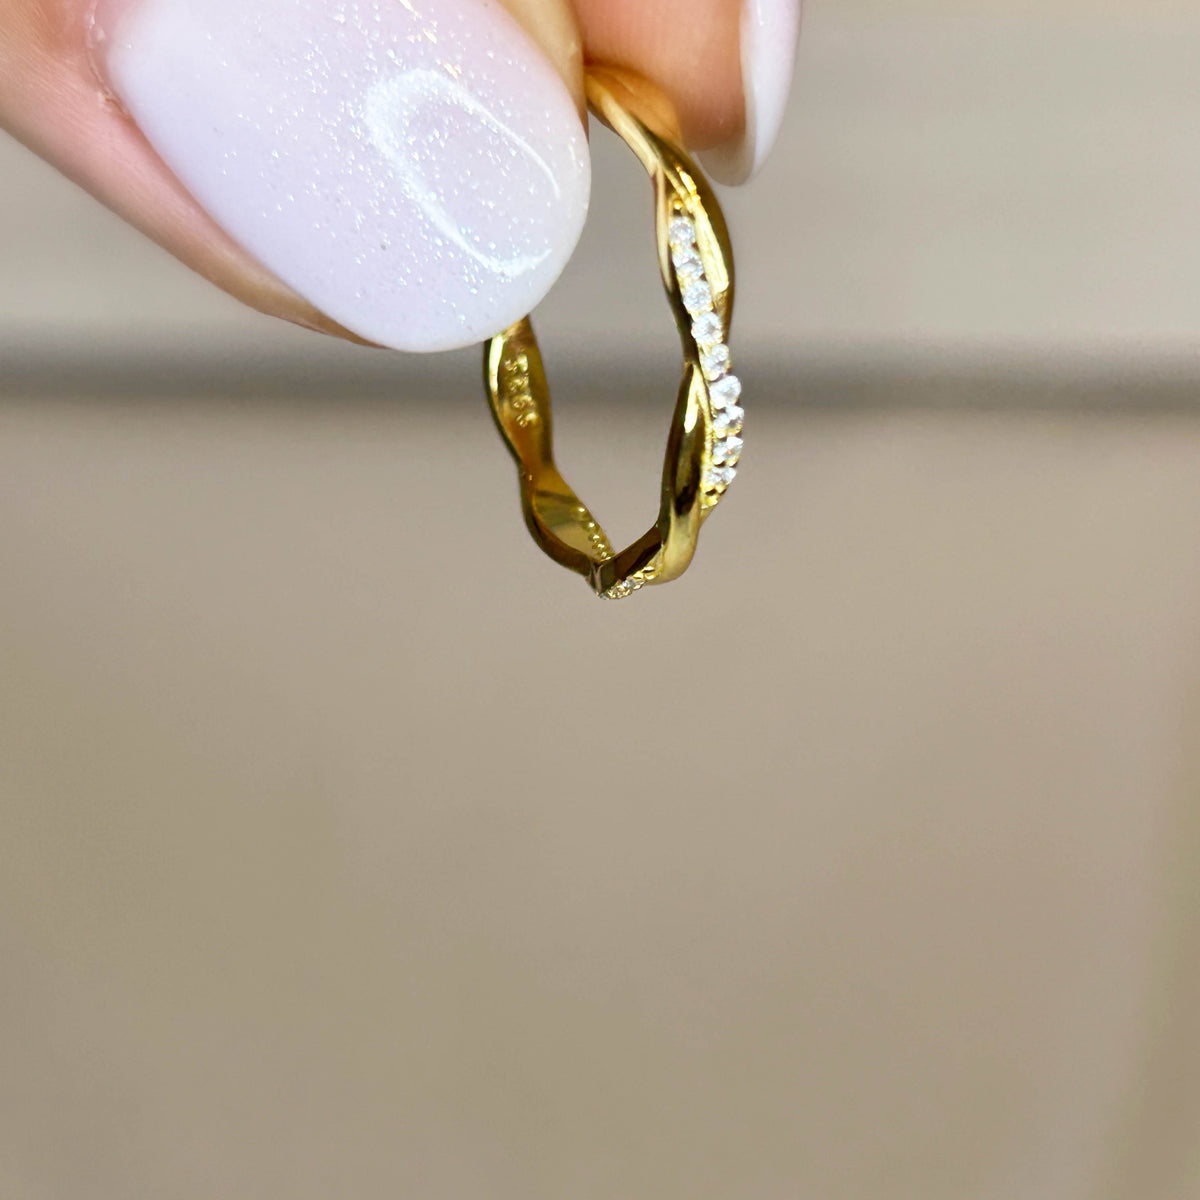 Wavy Golden Ring Size 8